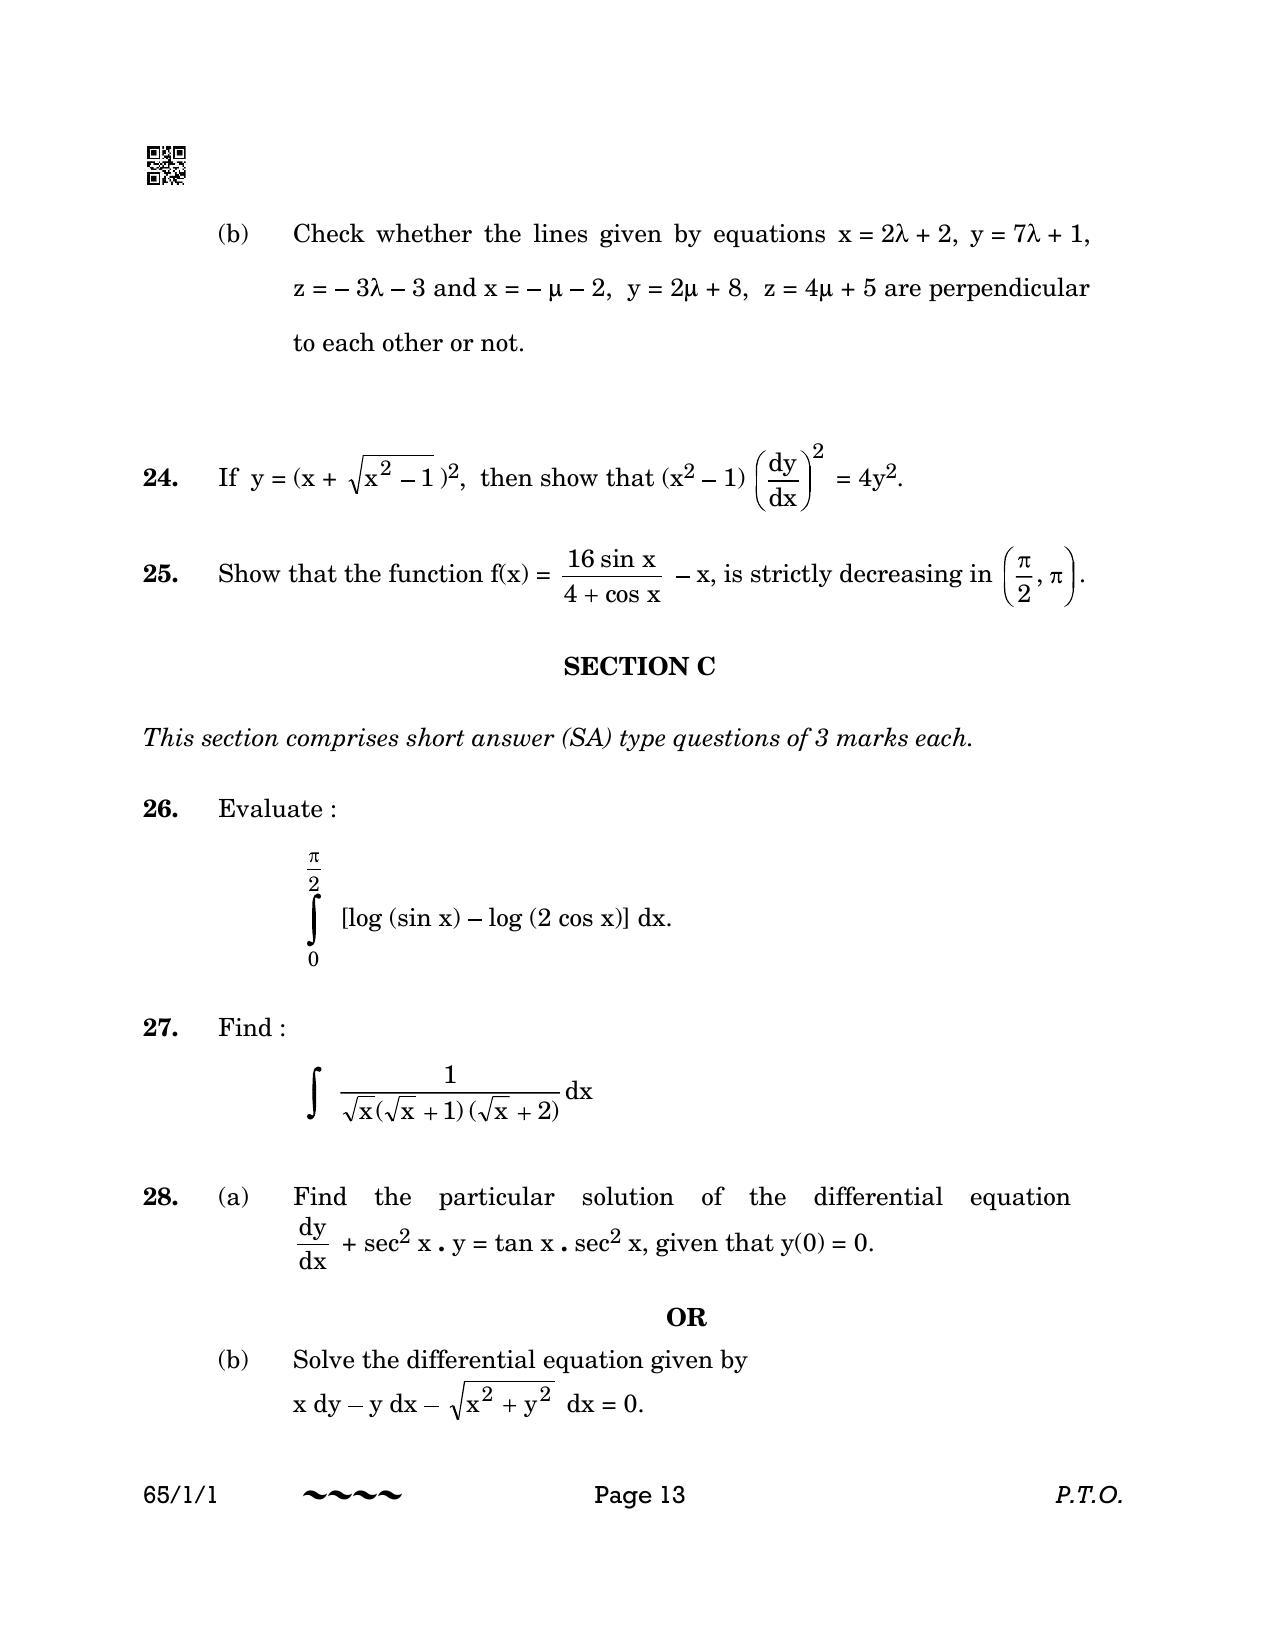 CBSE Class 12 65-1-1 MATHEMATICS 2023 Question Paper - Page 13